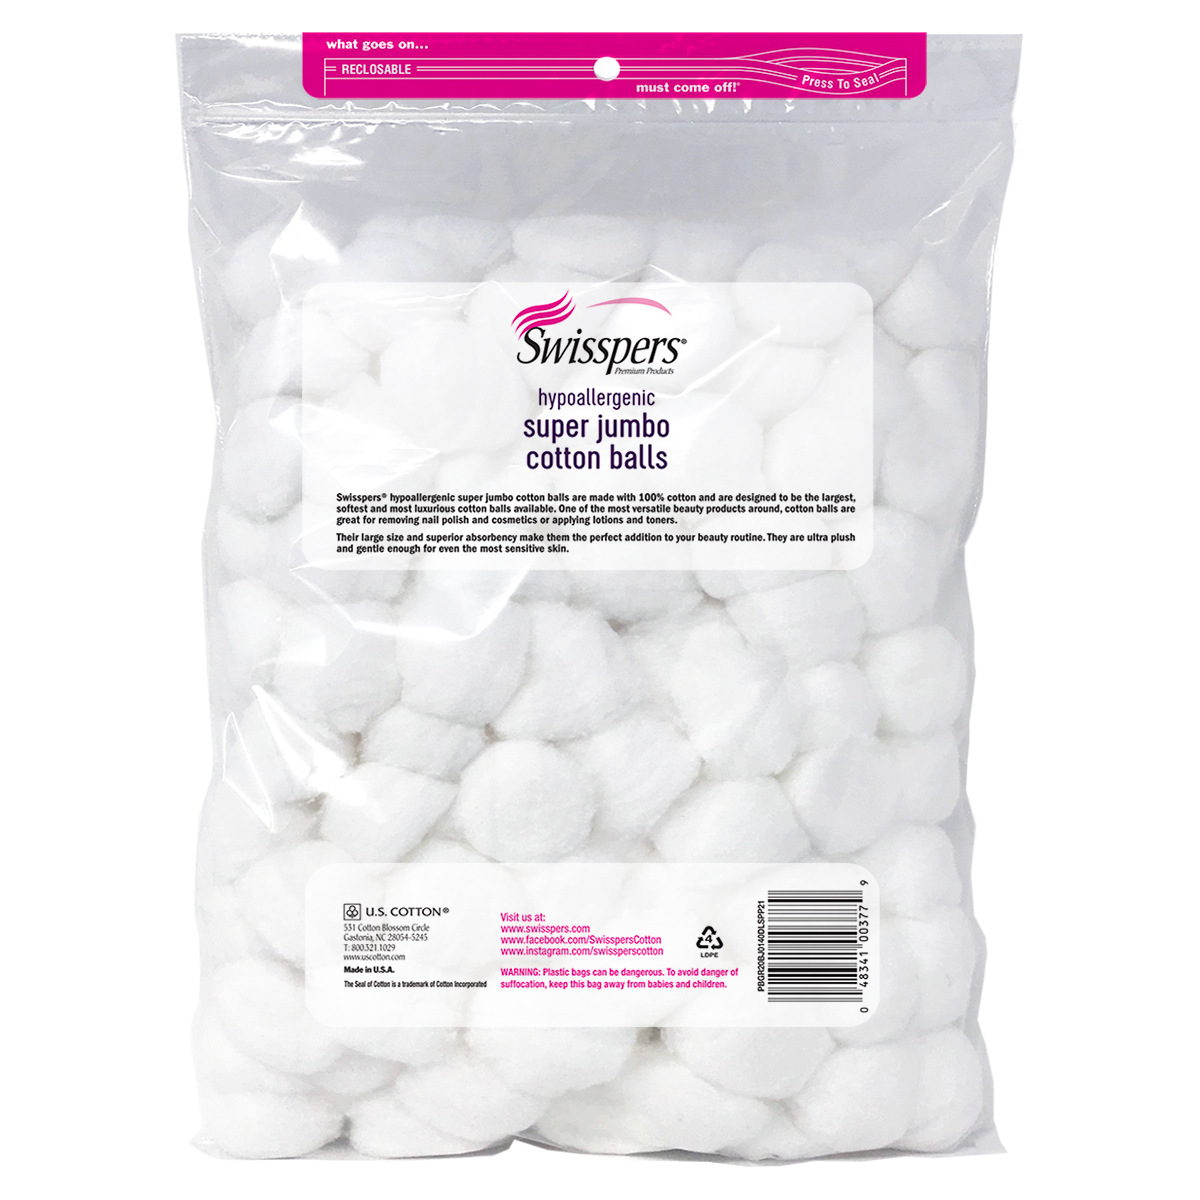 Swisspers 140ct, 100% cotton, white, Premium Hypoallergenic Super Jumbo Cotton Balls - image 4 of 4